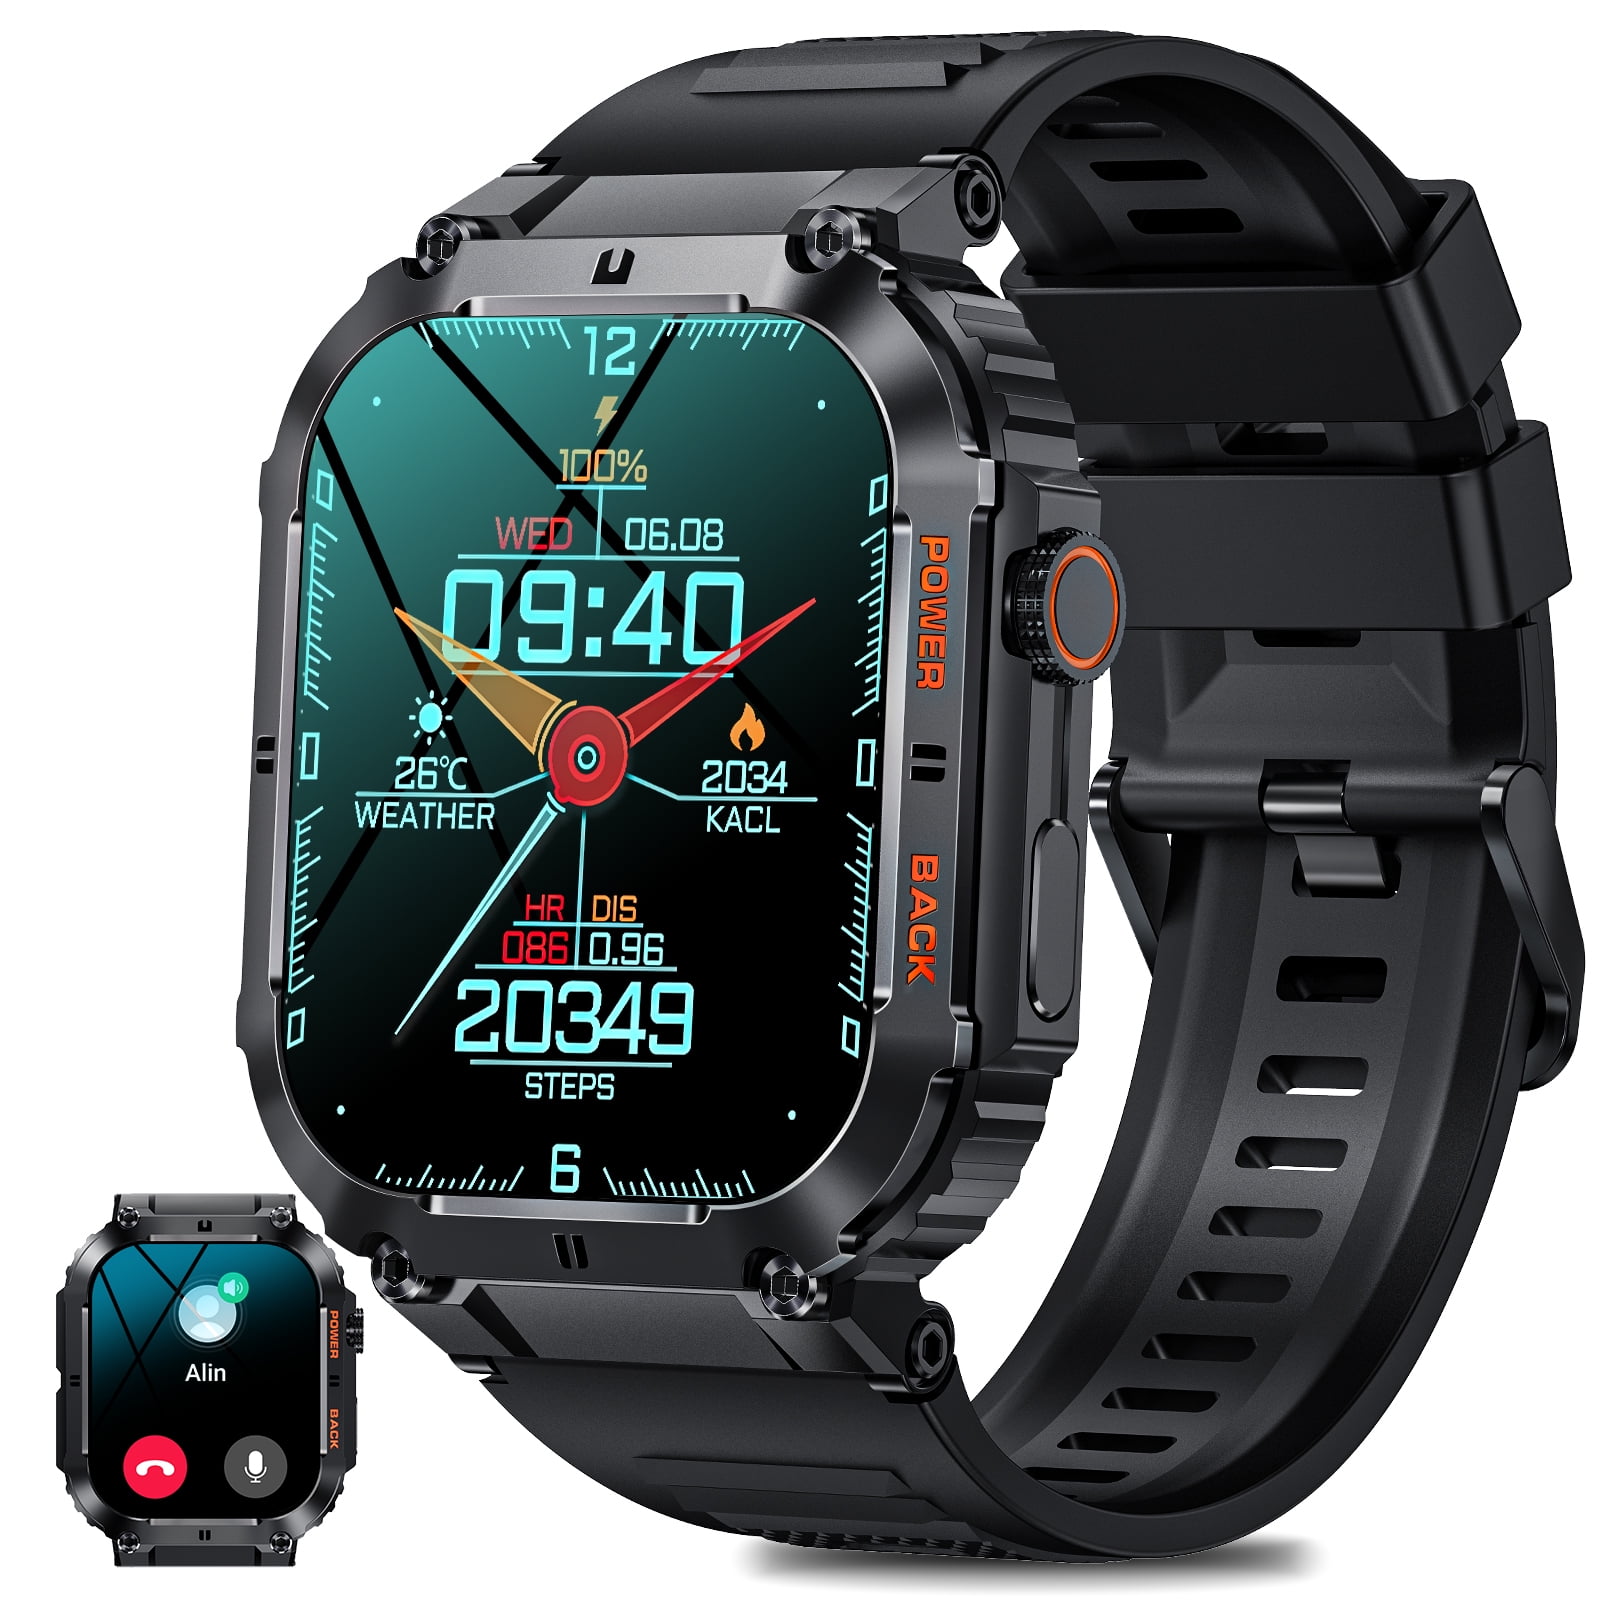 Eigiis 1 96 Military Smart Watch Outdoor Tactical Sports Watch Fitness Activity Tracker